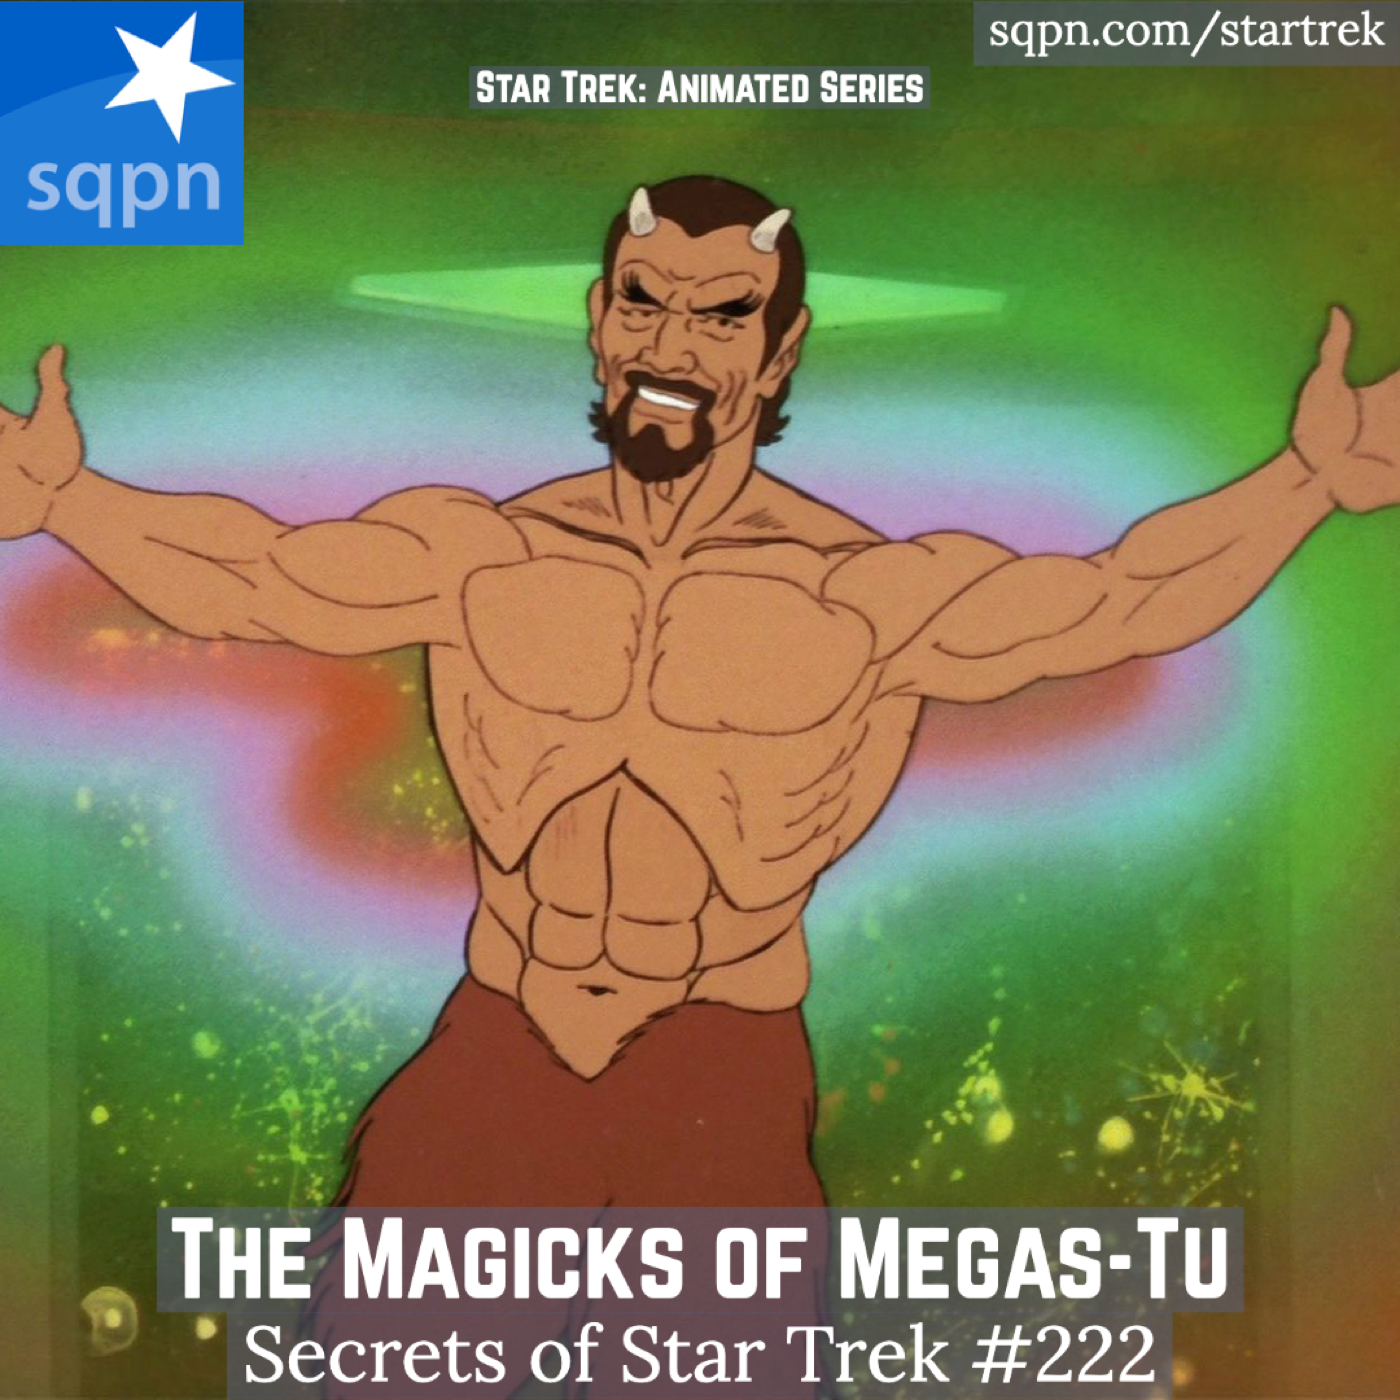 The Magicks of Megas-Tu (TAS)